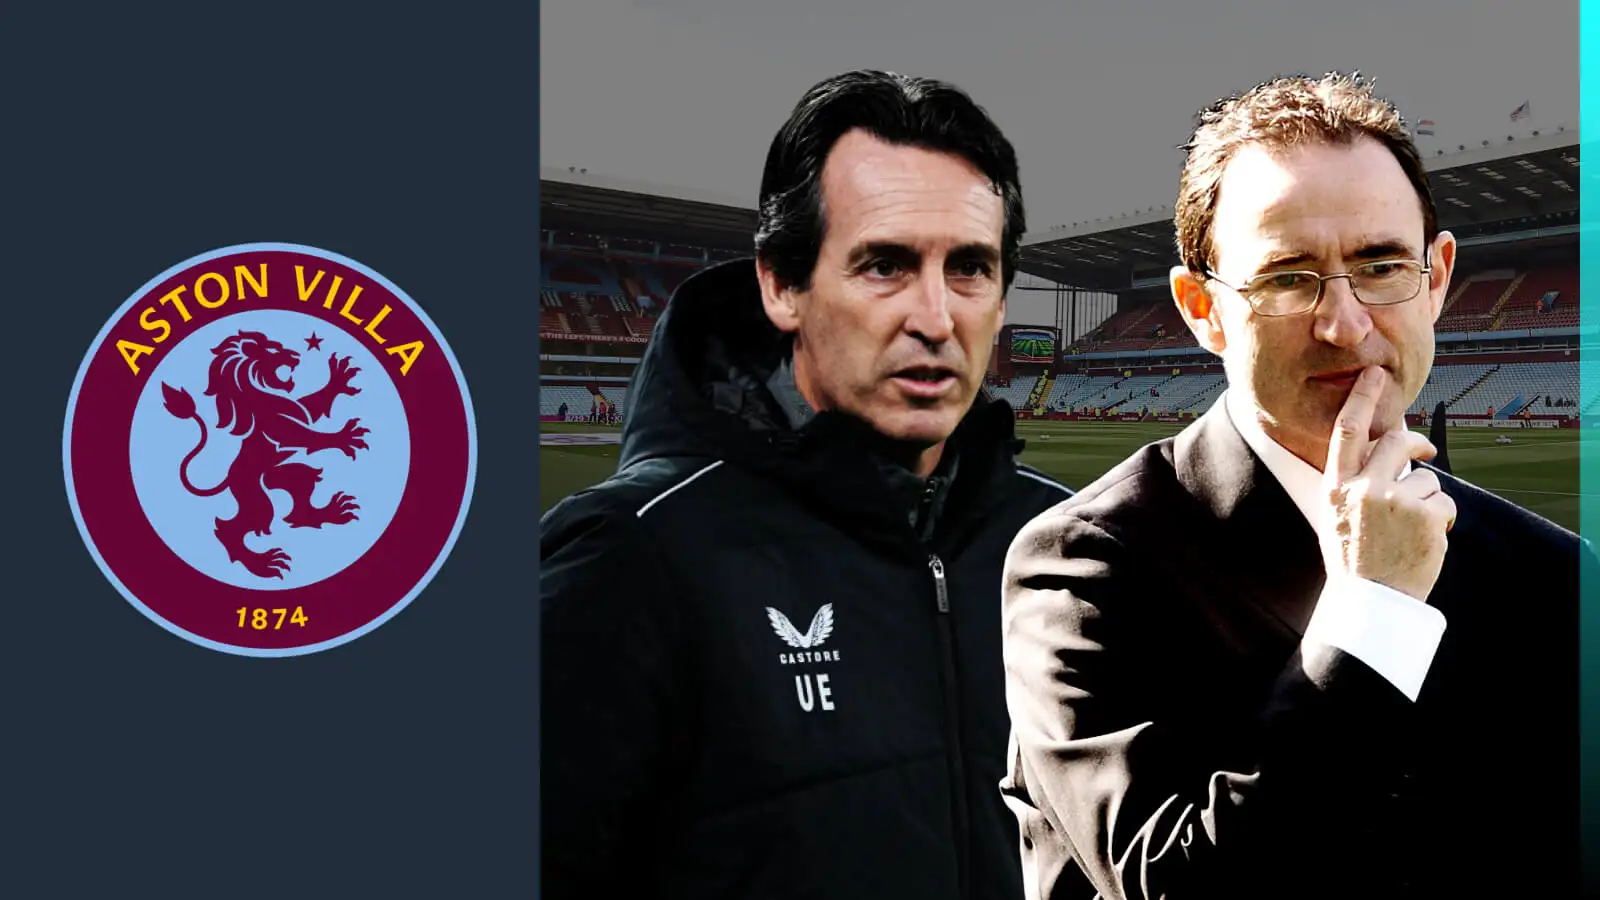 Martin O'Neill and Unai Emery as Aston Villa managers